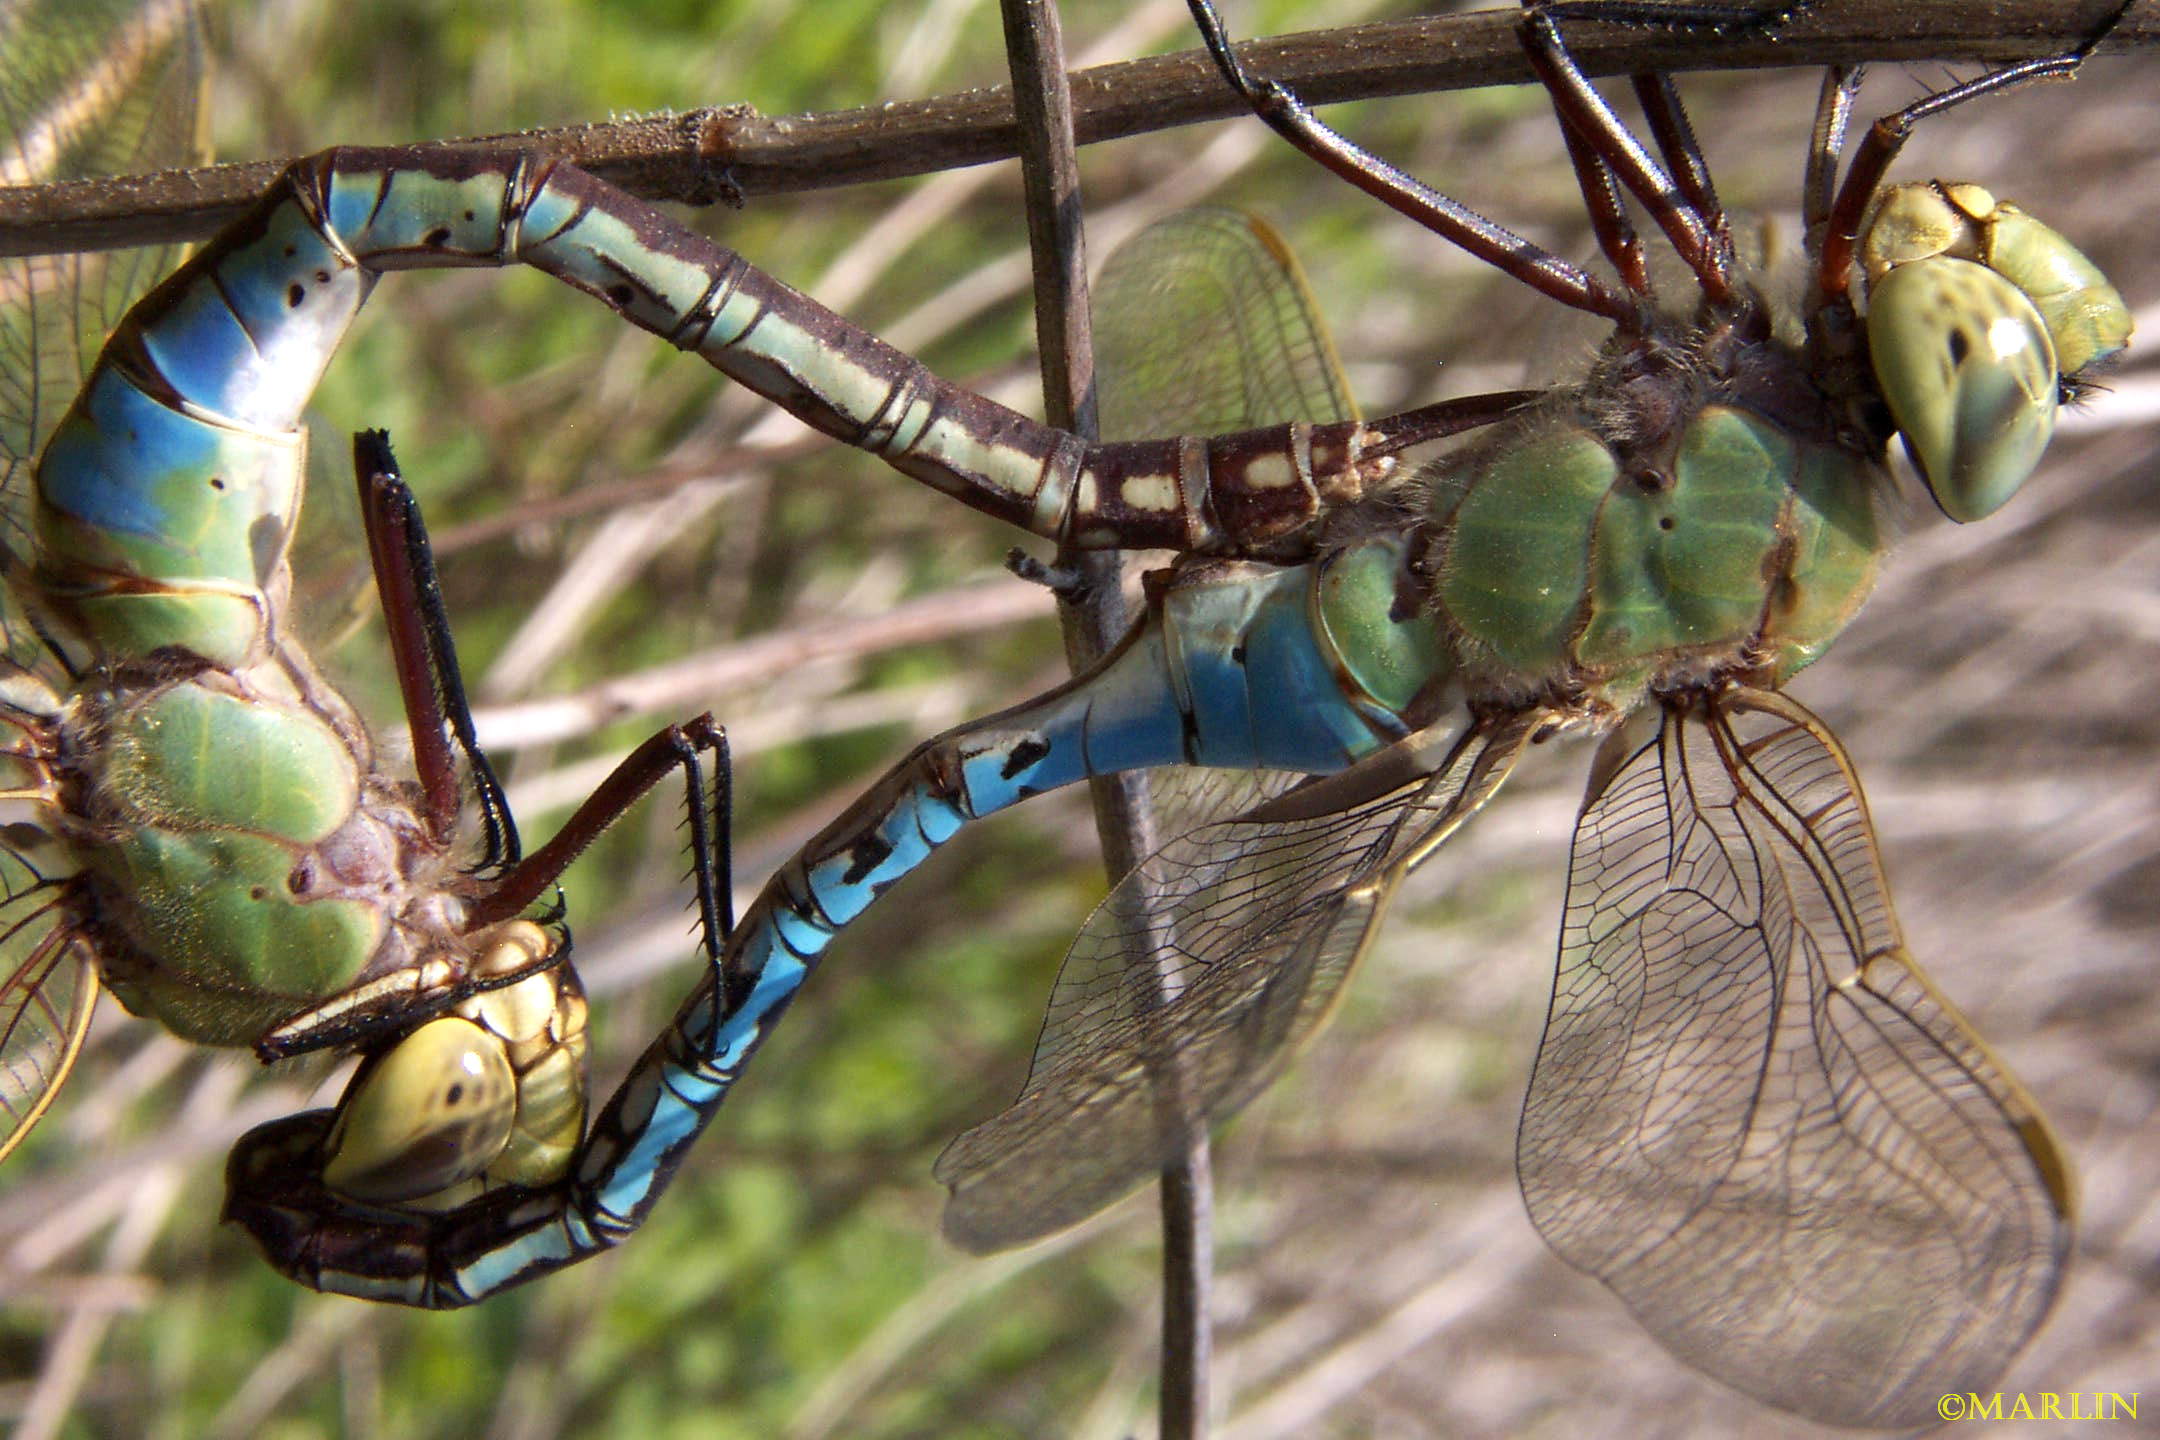 Green darner dragonfly mating wheel